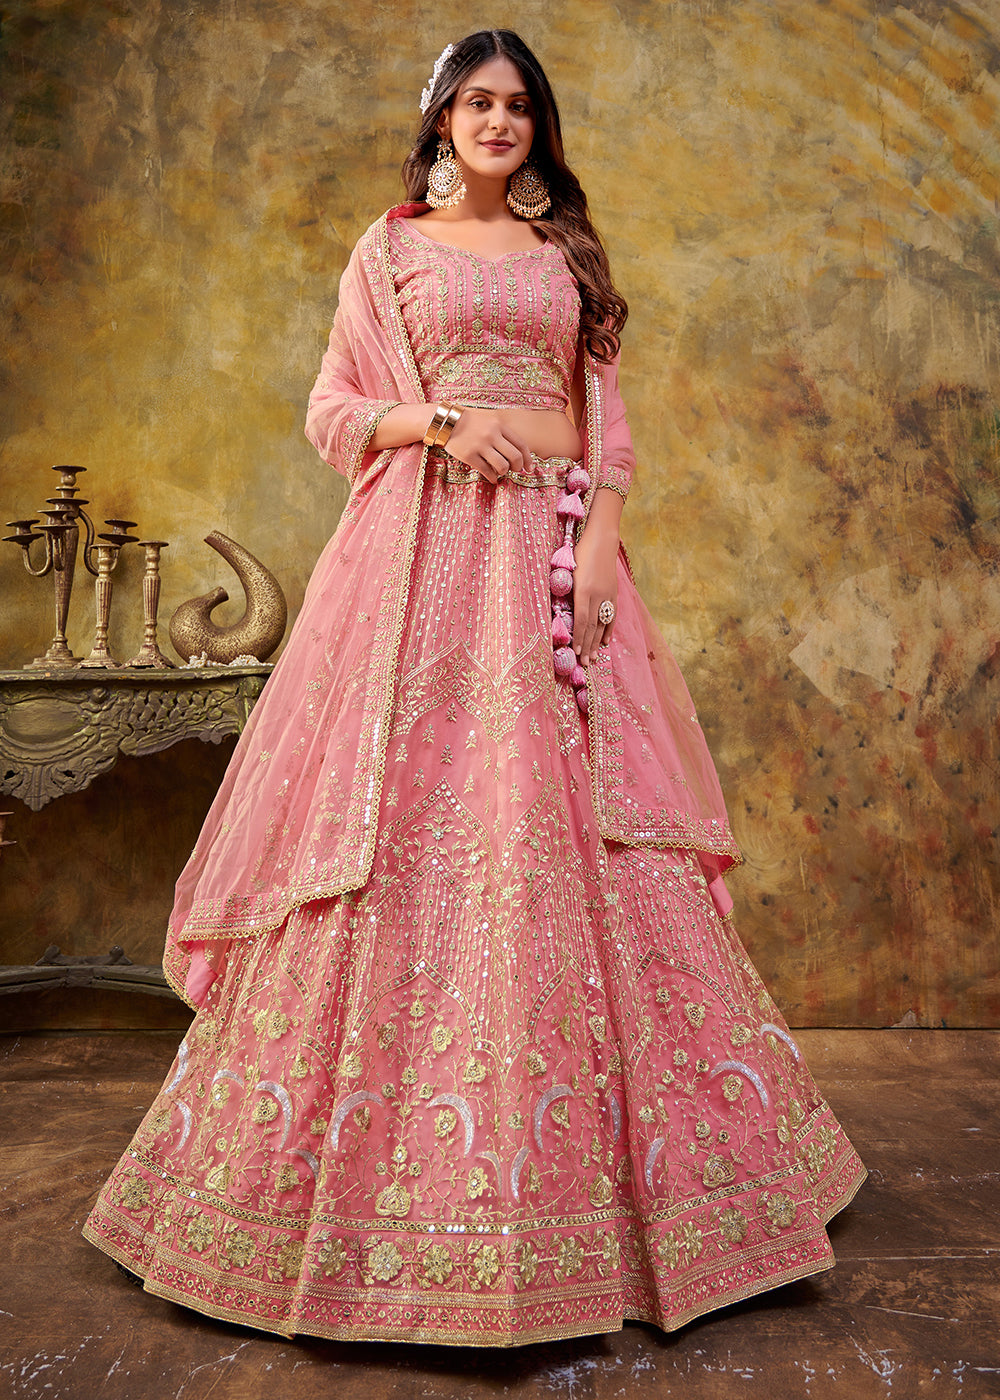 Bollywood Heavy Net Embroidered Indian lehenga choli With Blouse Pink Free  Size | eBay